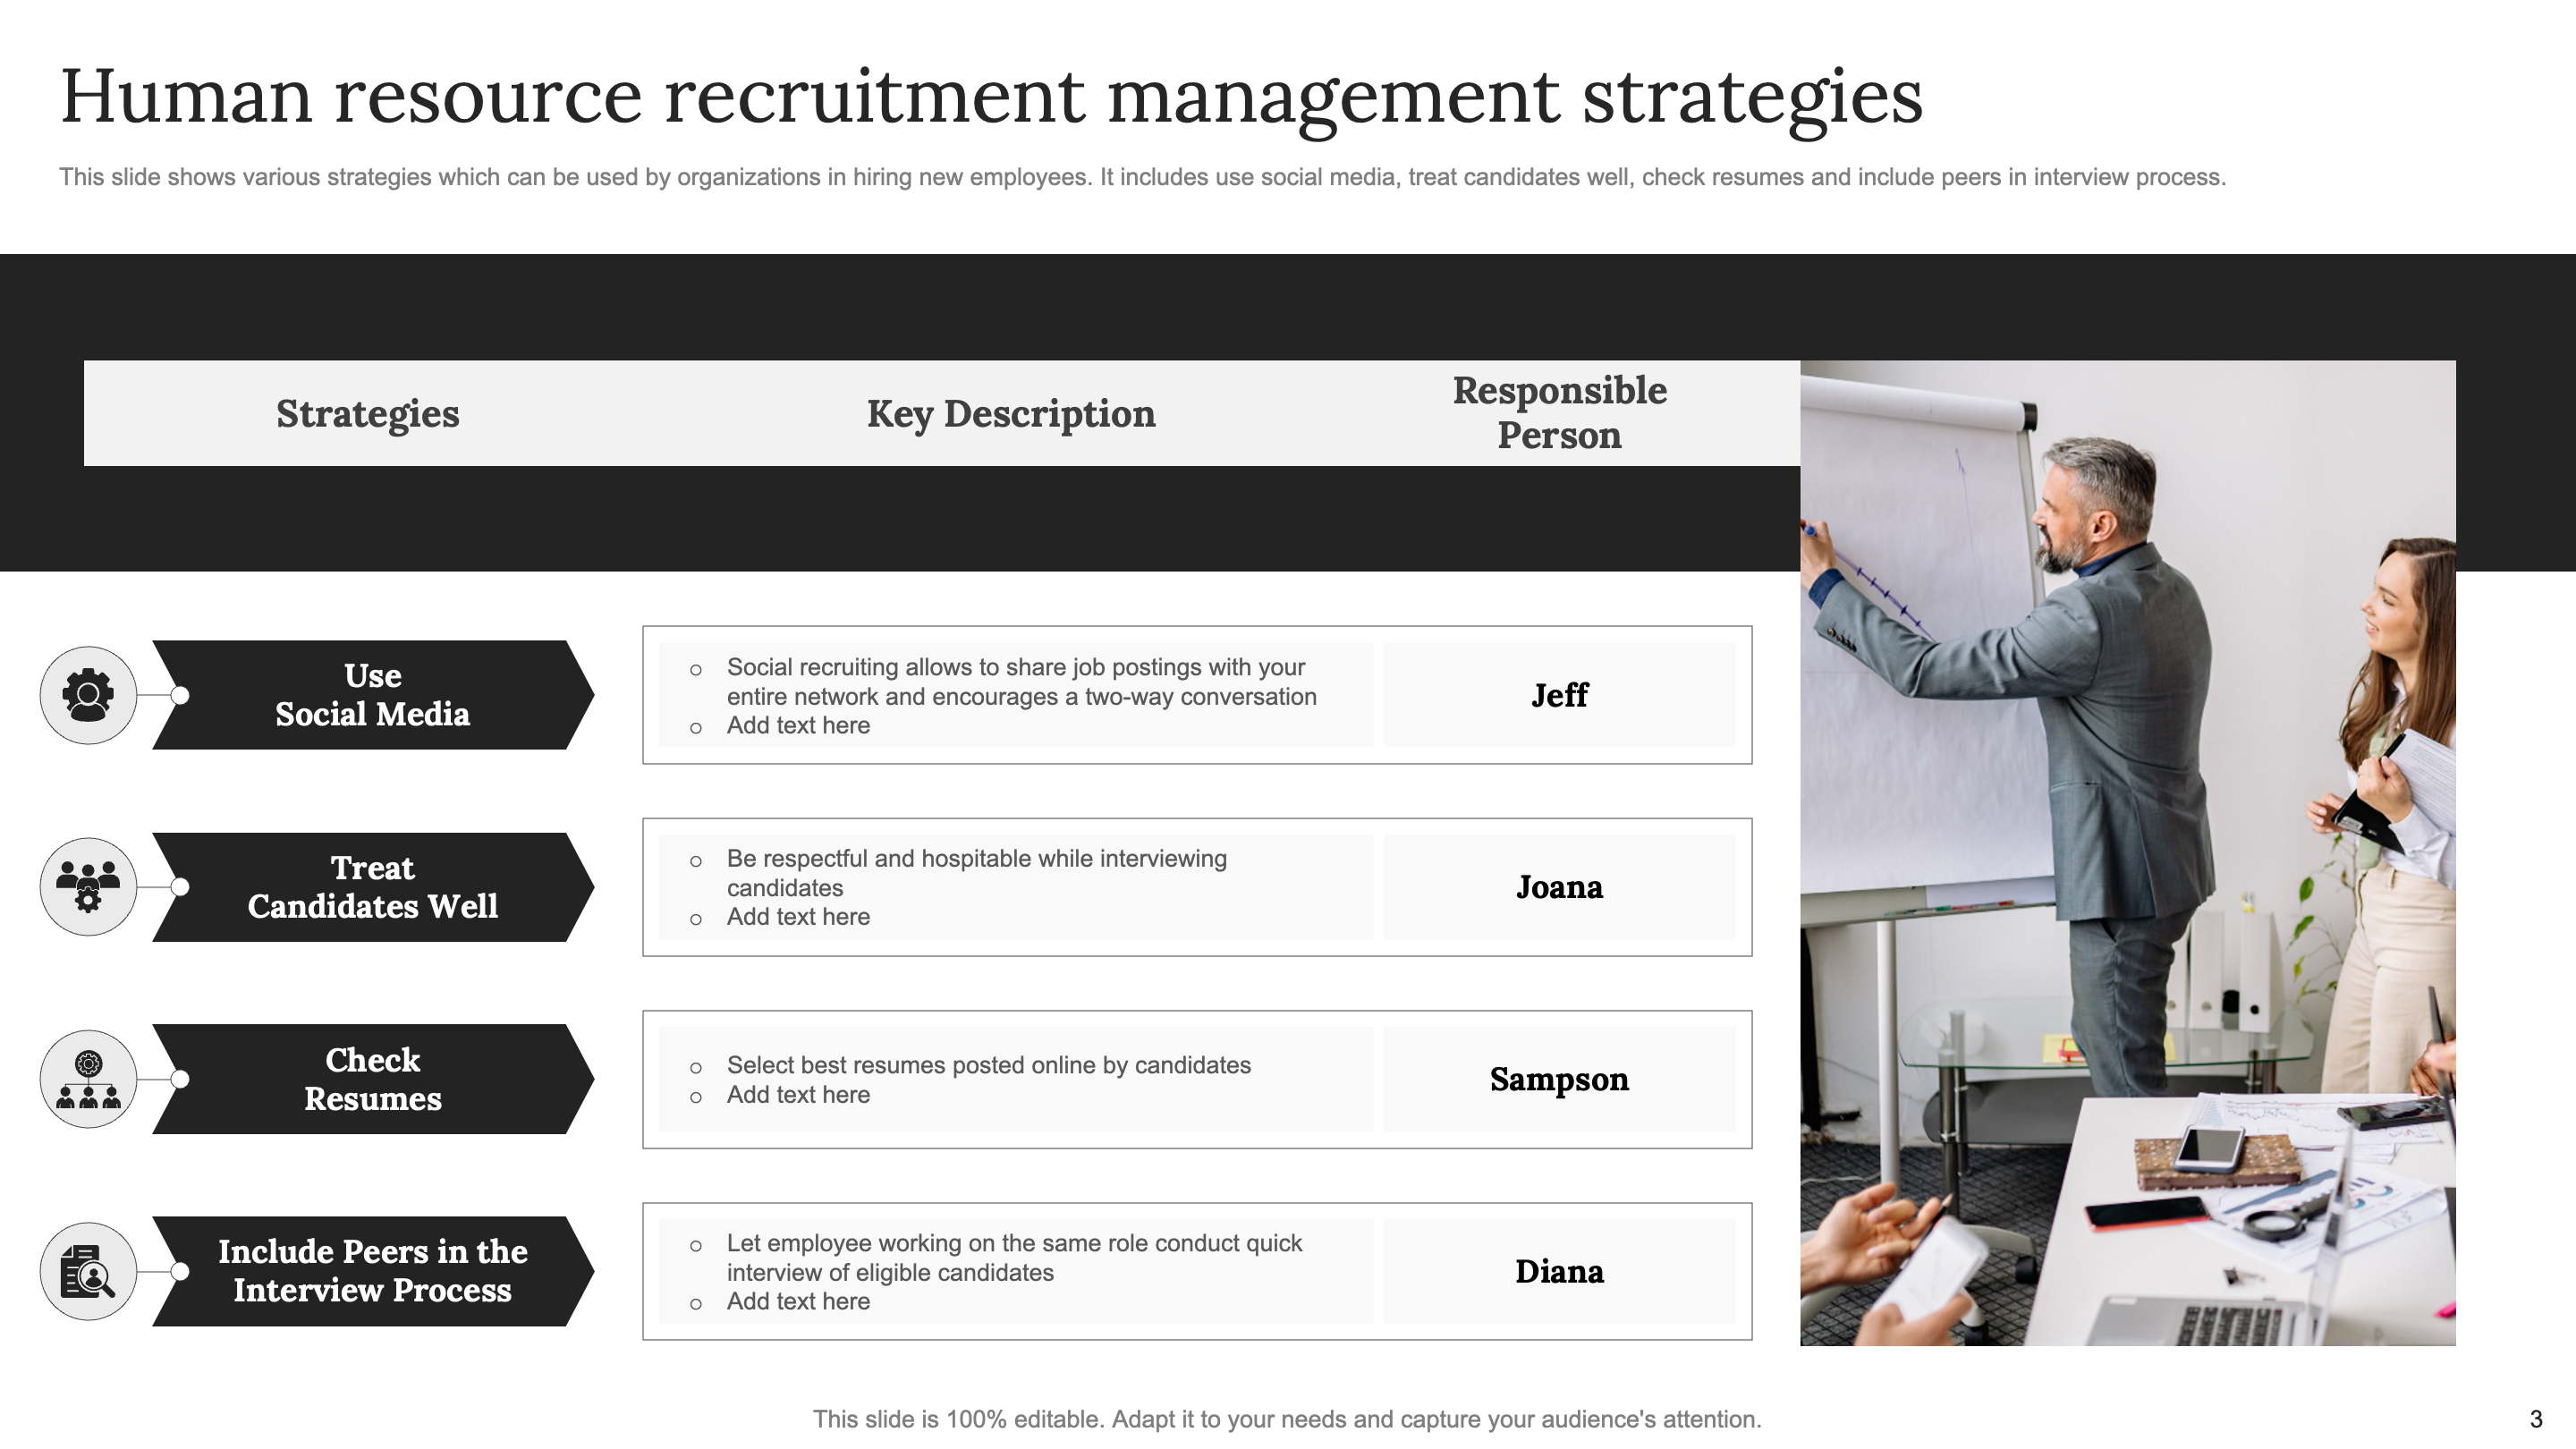 Human Resource Recruitment Management Strategies 